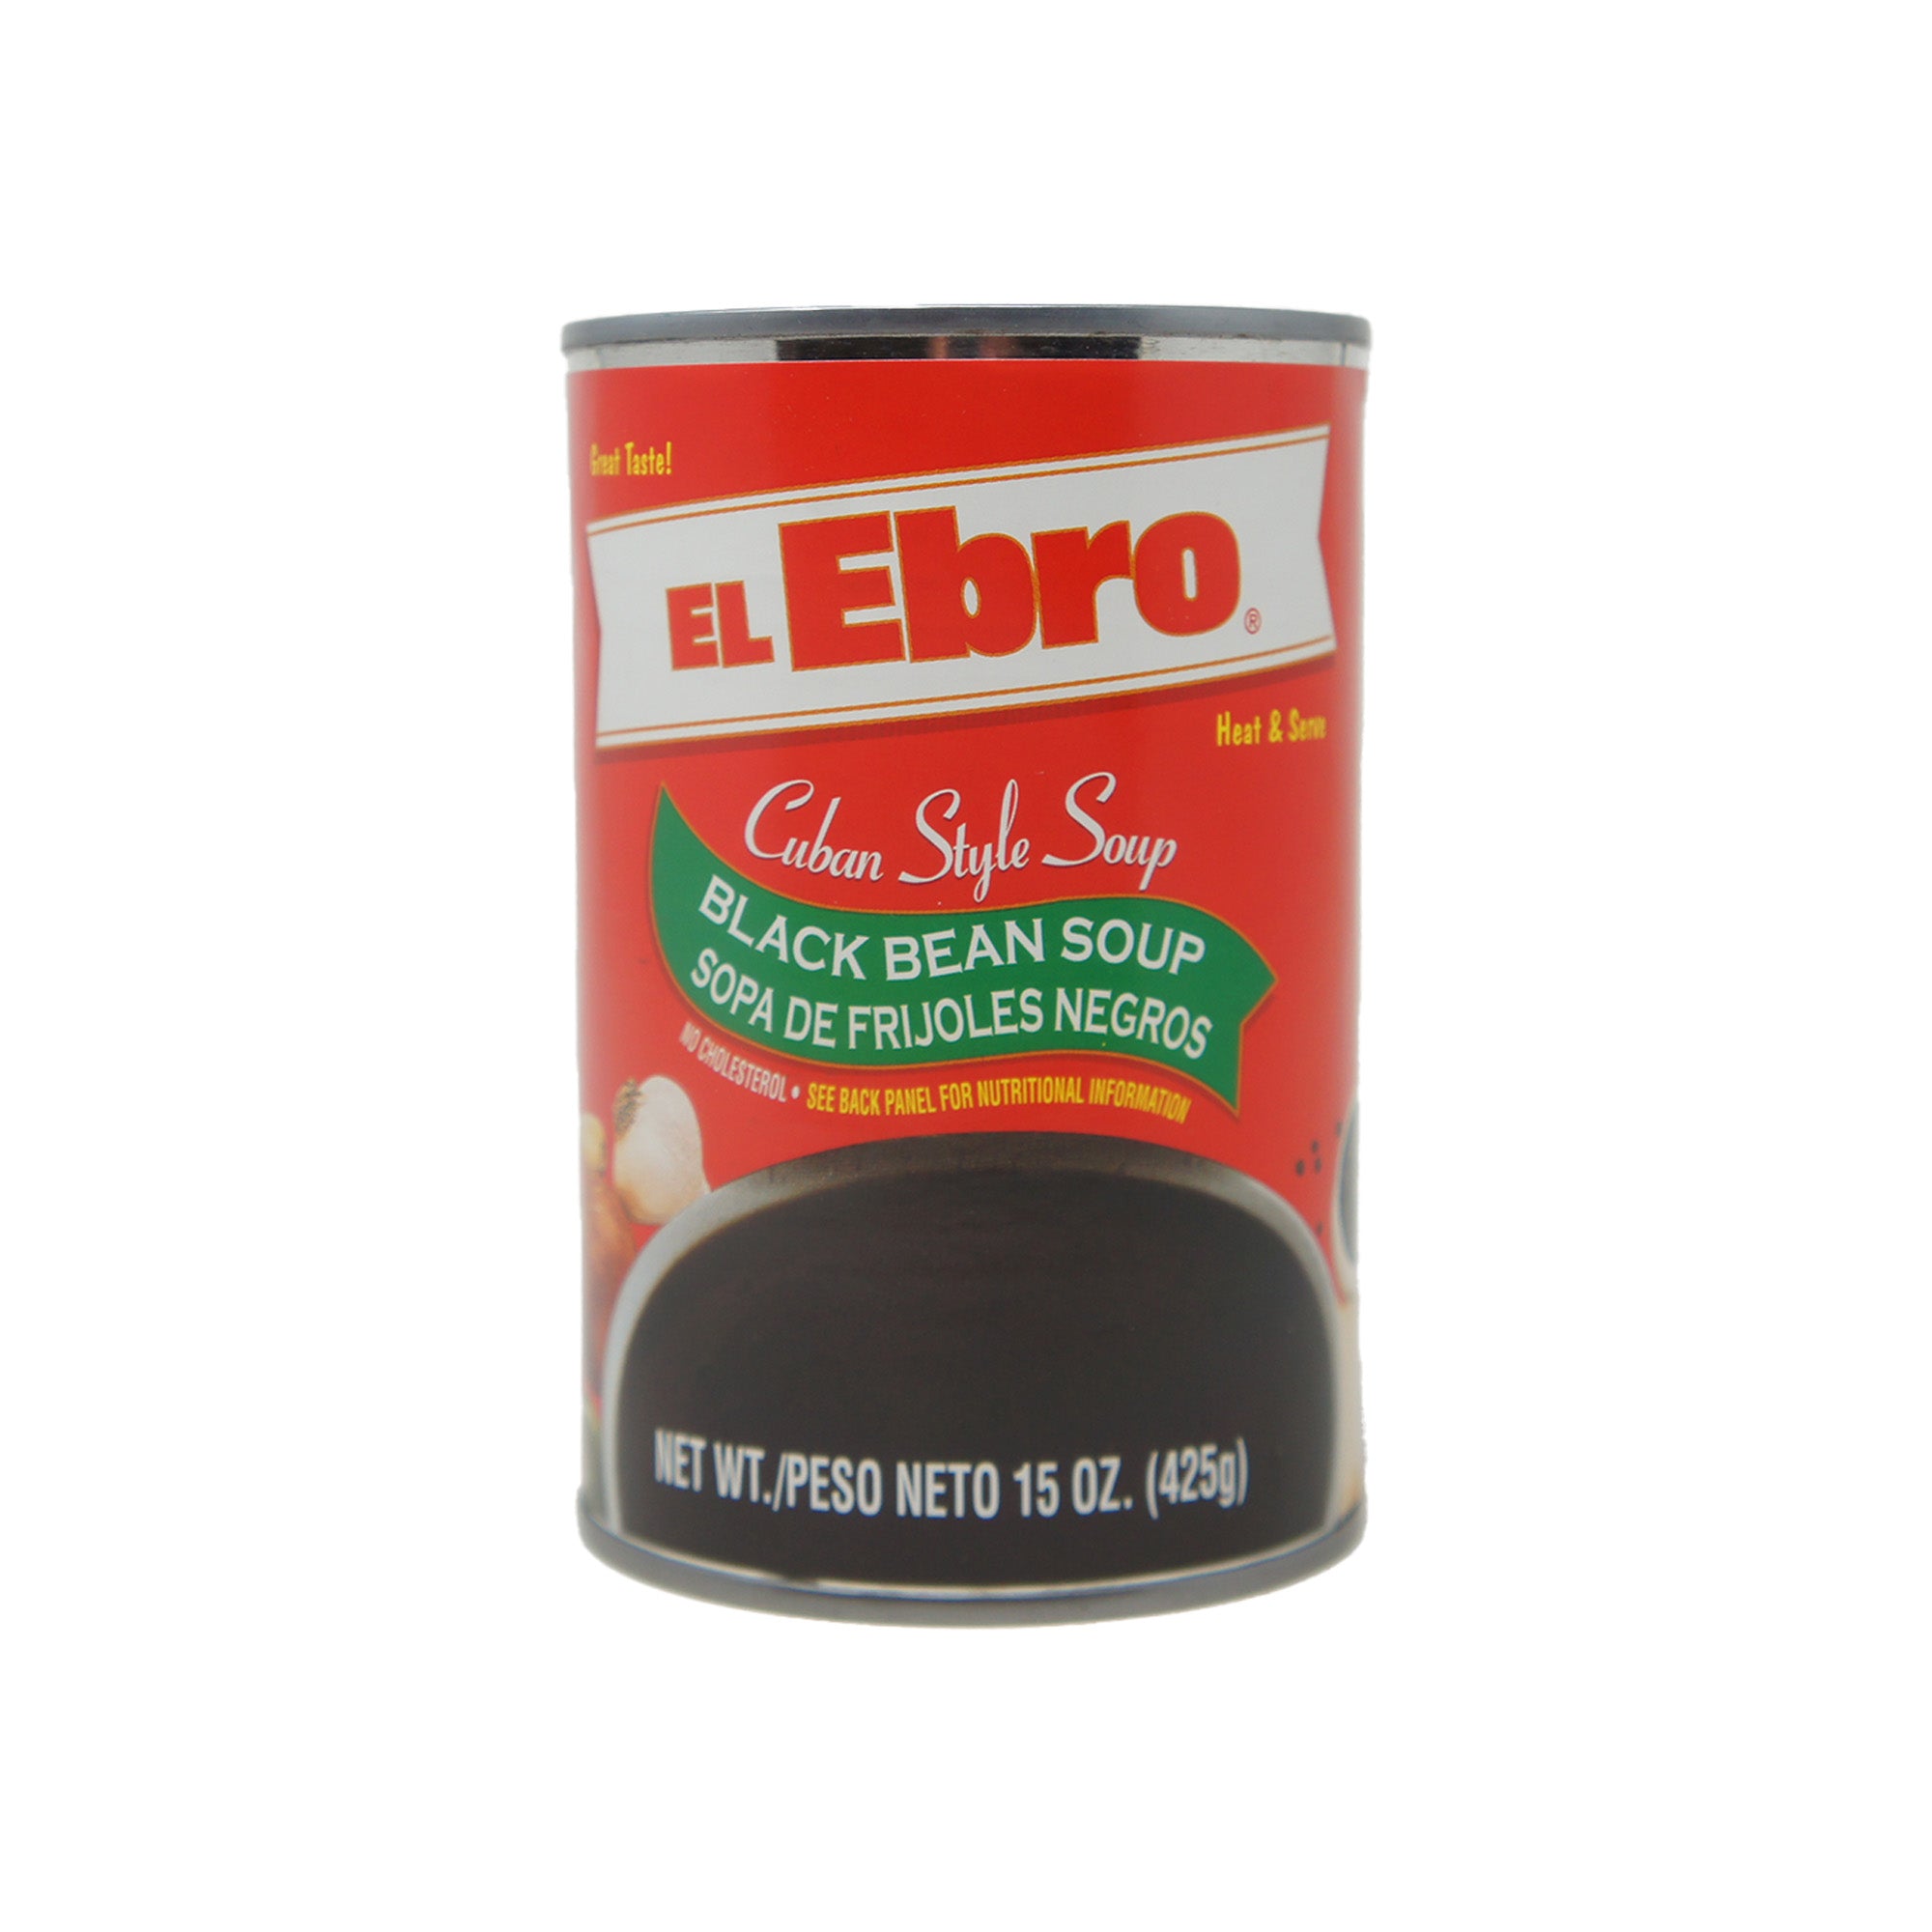 El Ebro, Black Bean Cuban Style Soup 15 oz Cans, Multipack